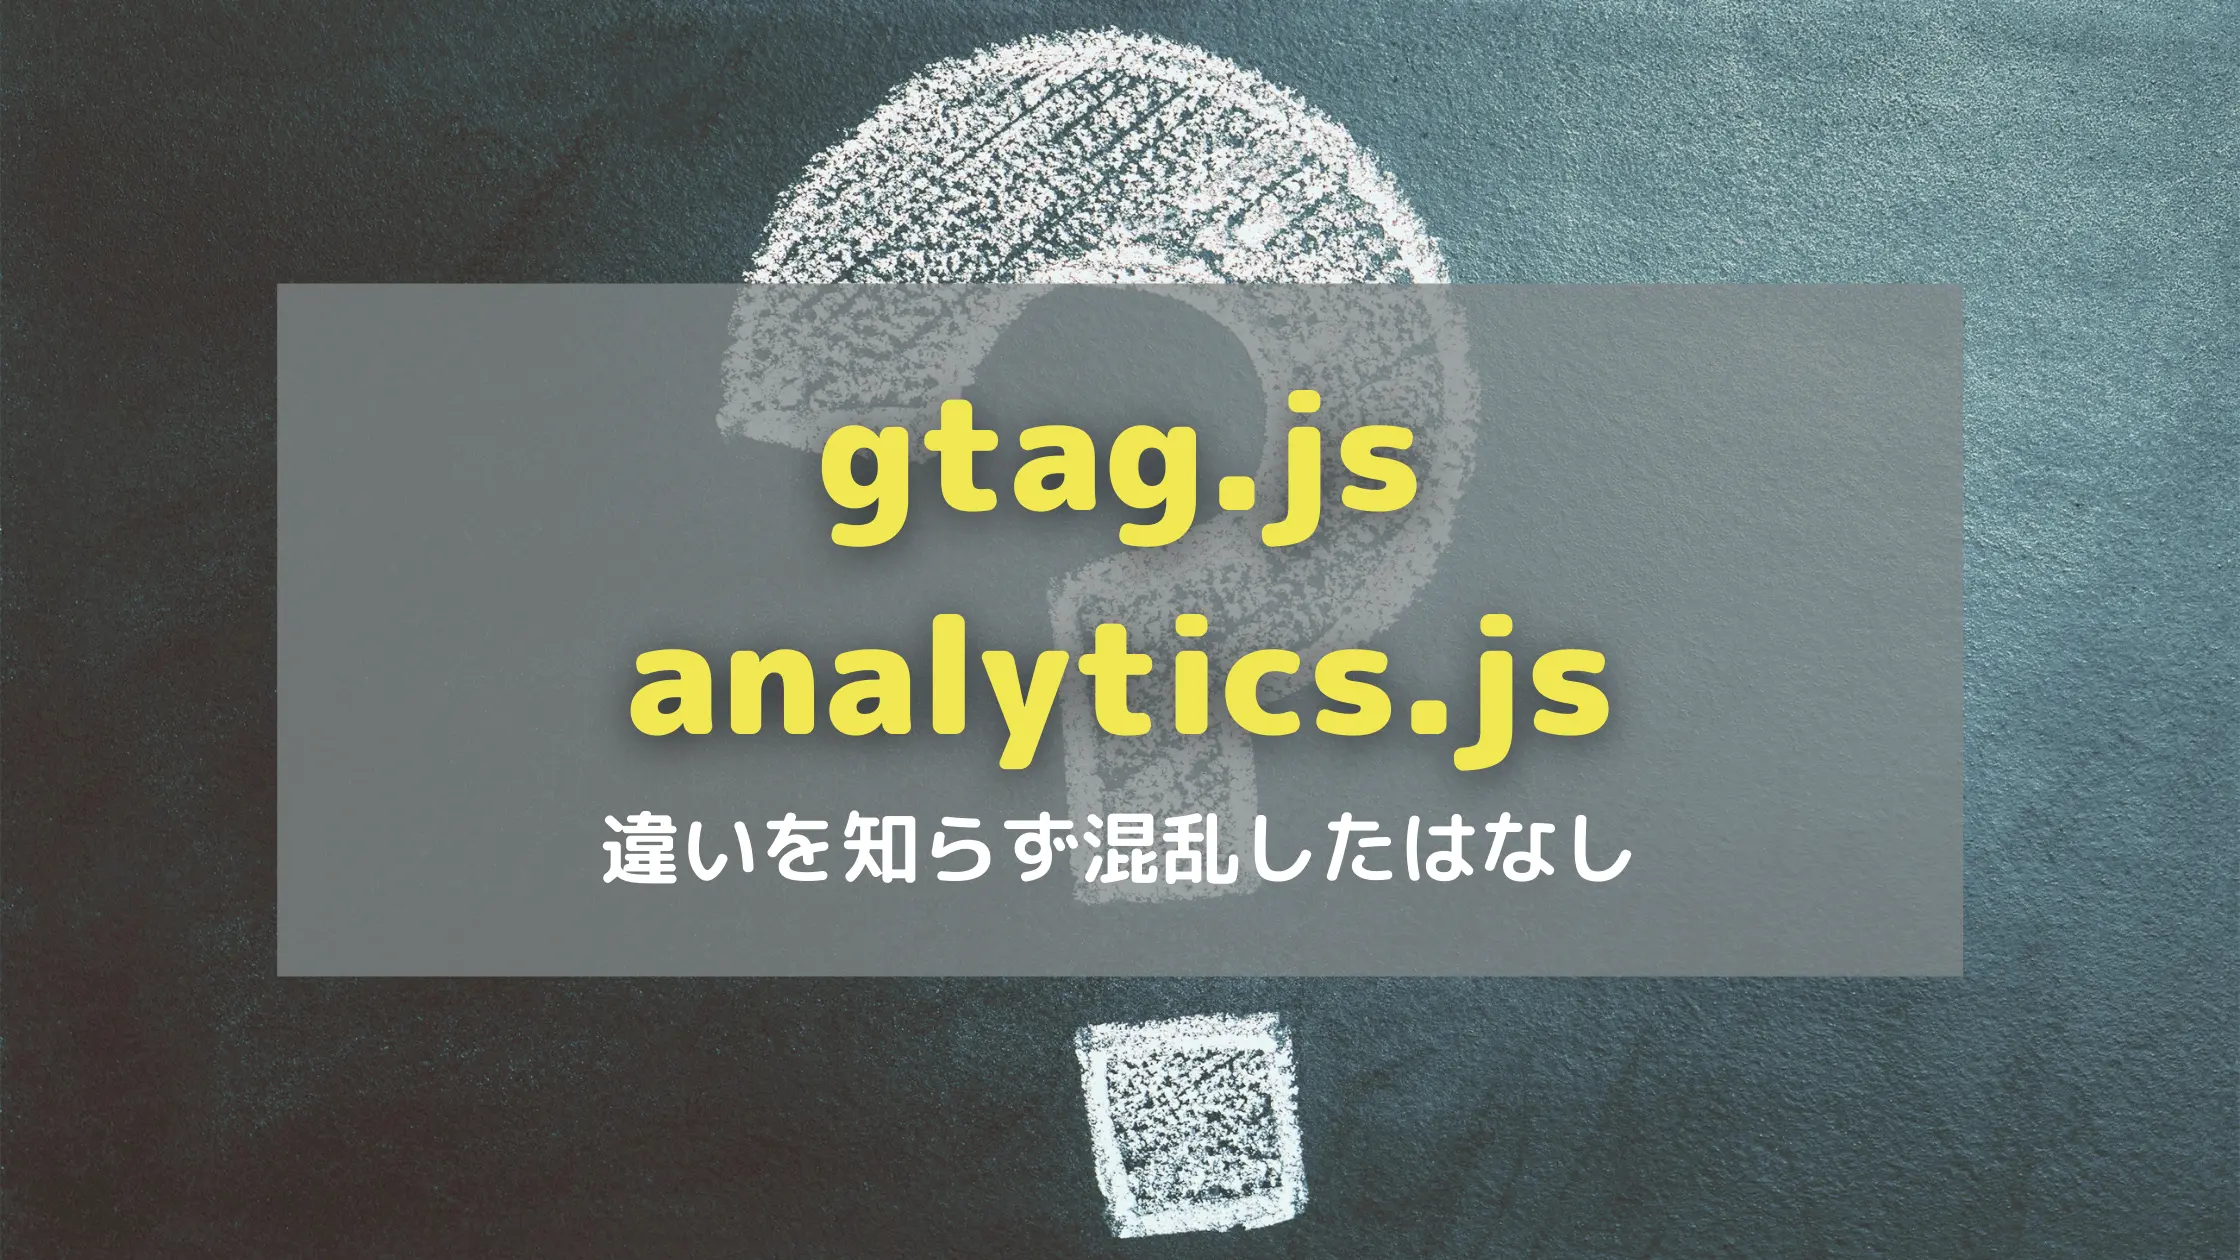 gtag.js、analytics.jsとは